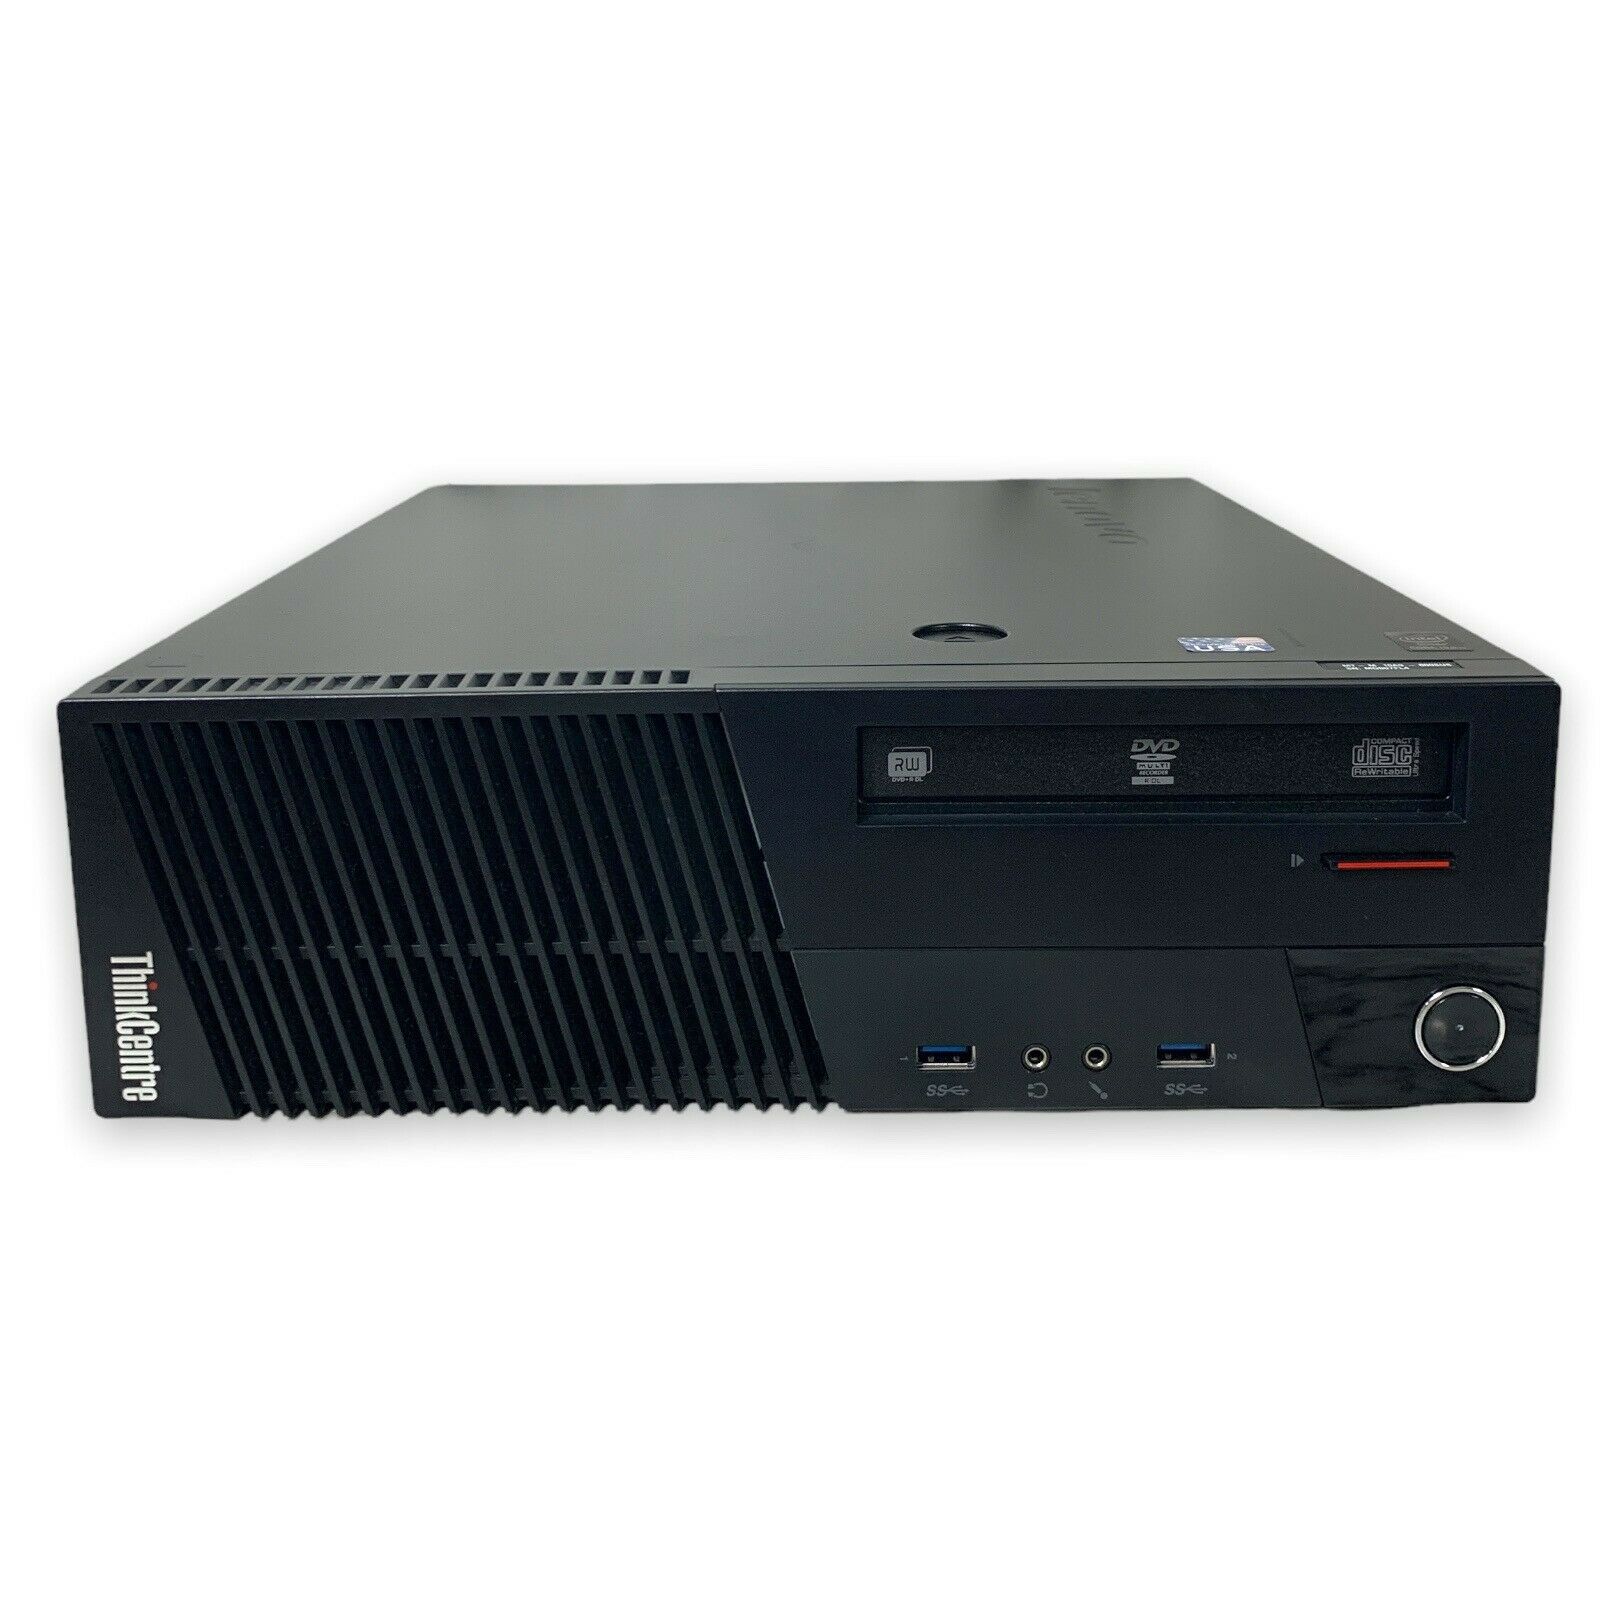 Lenovo ThinkCentre M93P USDT i5-4570 3.2GHz 8GB RAM 500GB HDD DVD+RW Win10 Pro